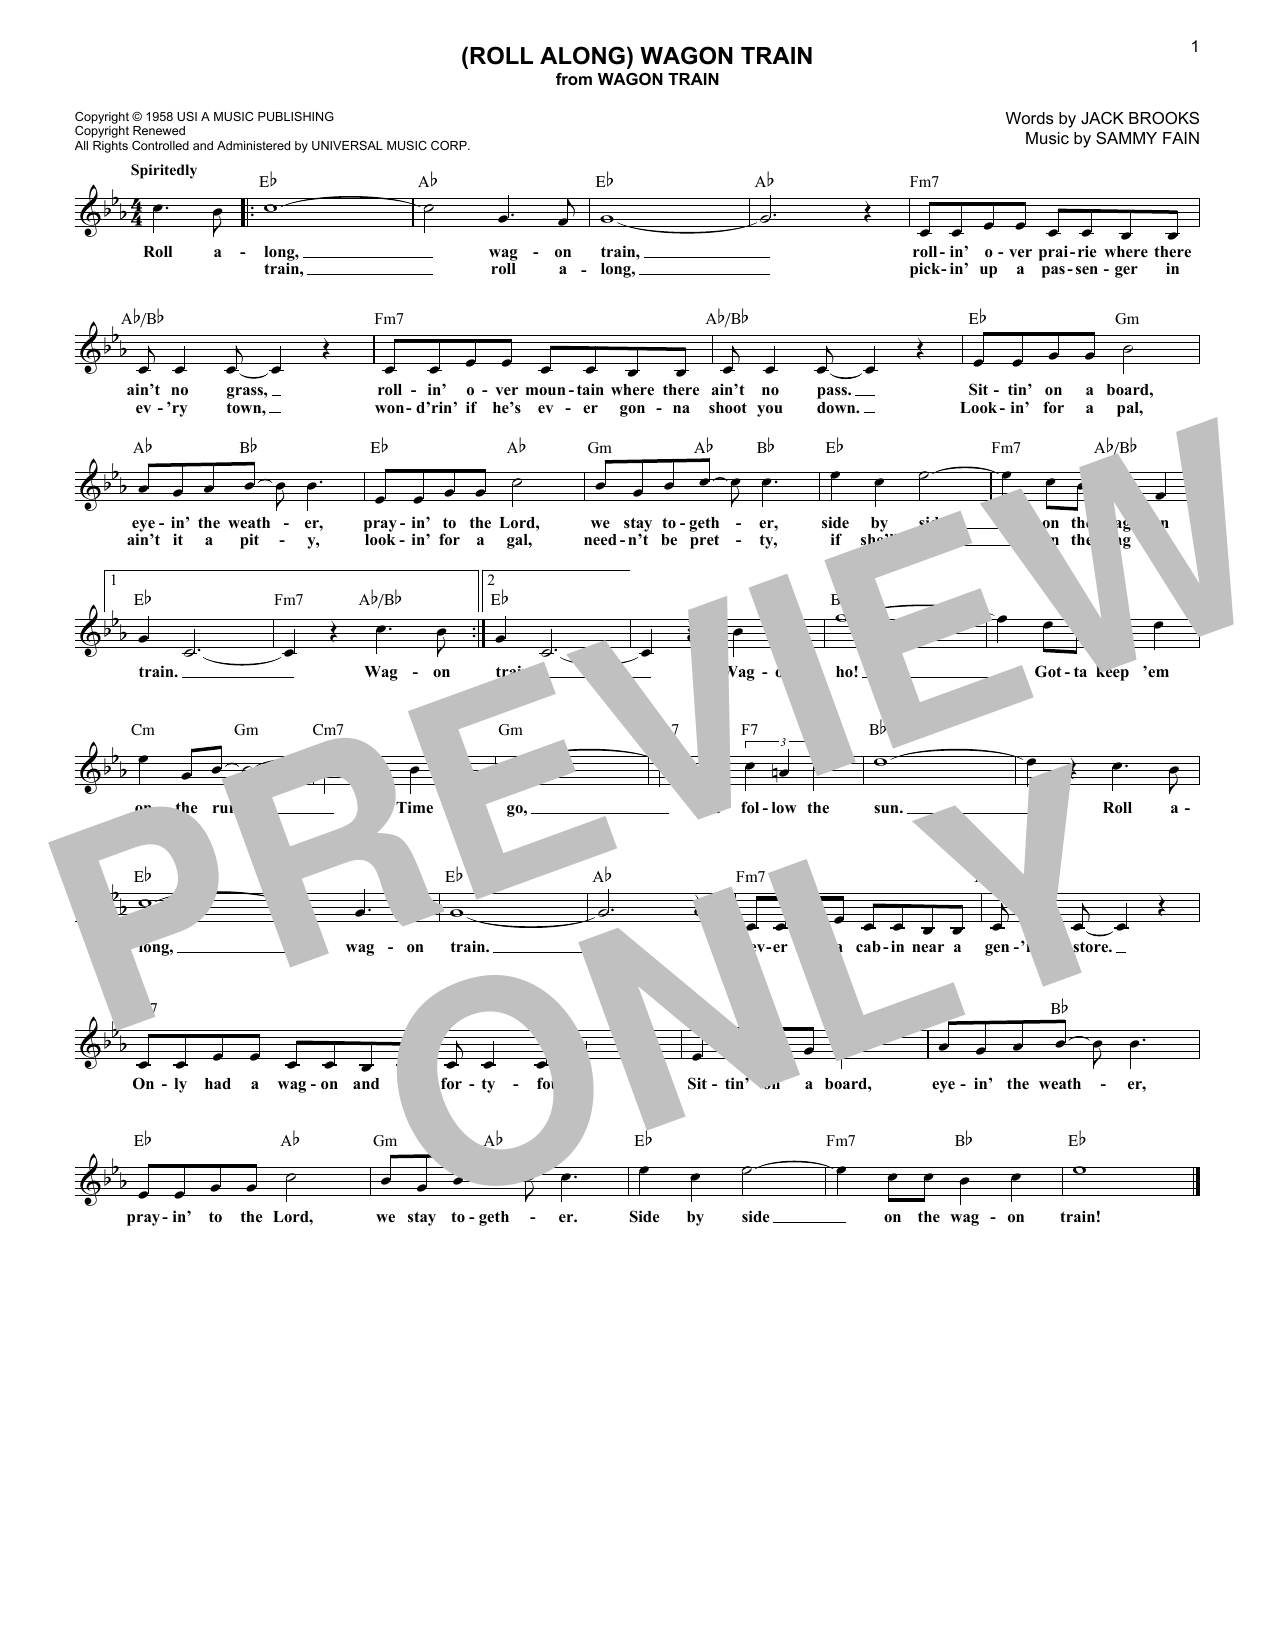 Sammy Fain (Roll Along) Wagon Train Sheet Music Notes & Chords for Lead Sheet / Fake Book - Download or Print PDF